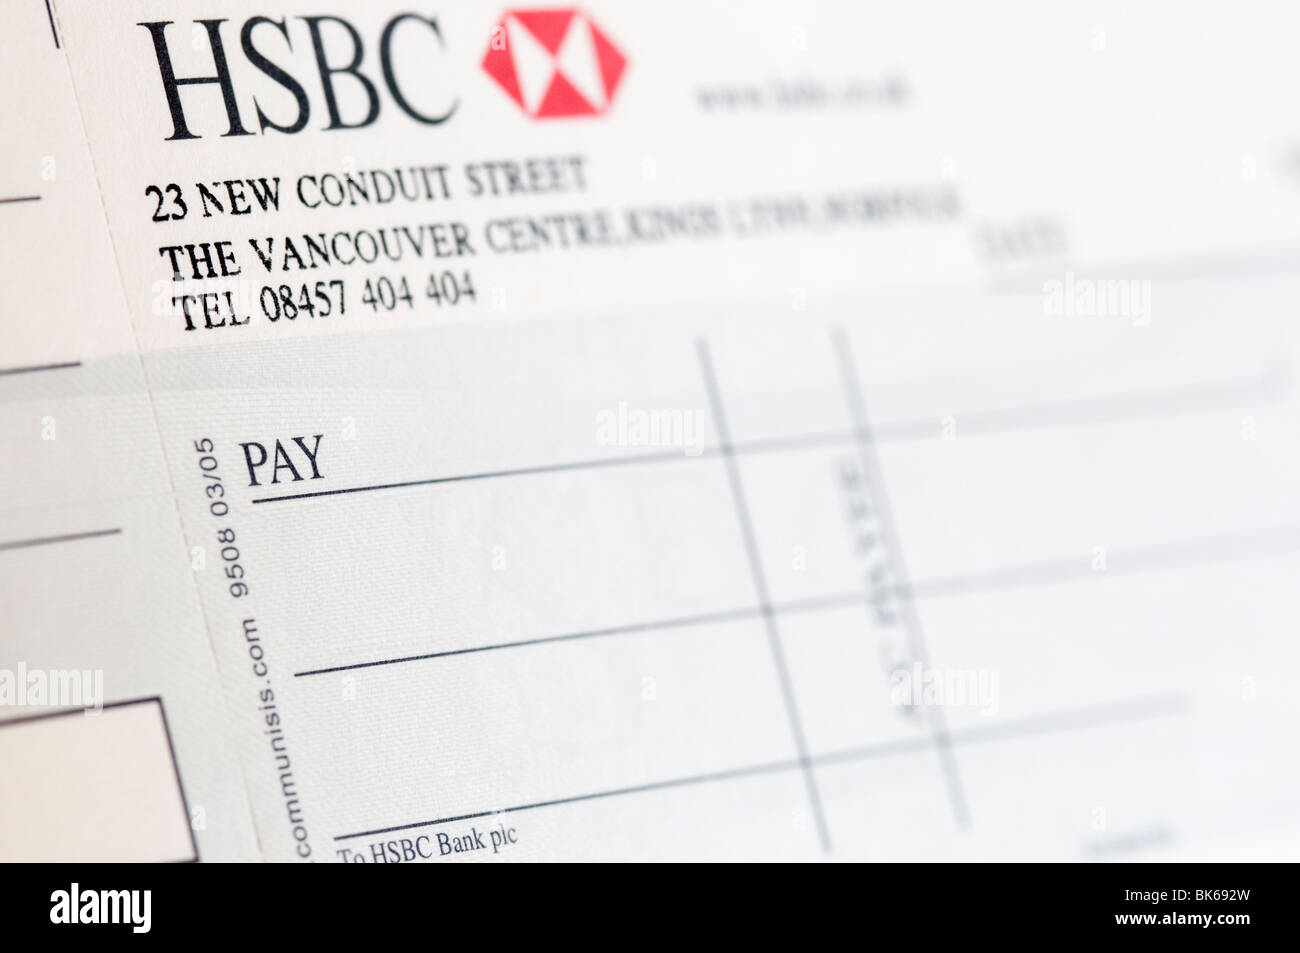 HSBC Bank name on cheque Stock Photo